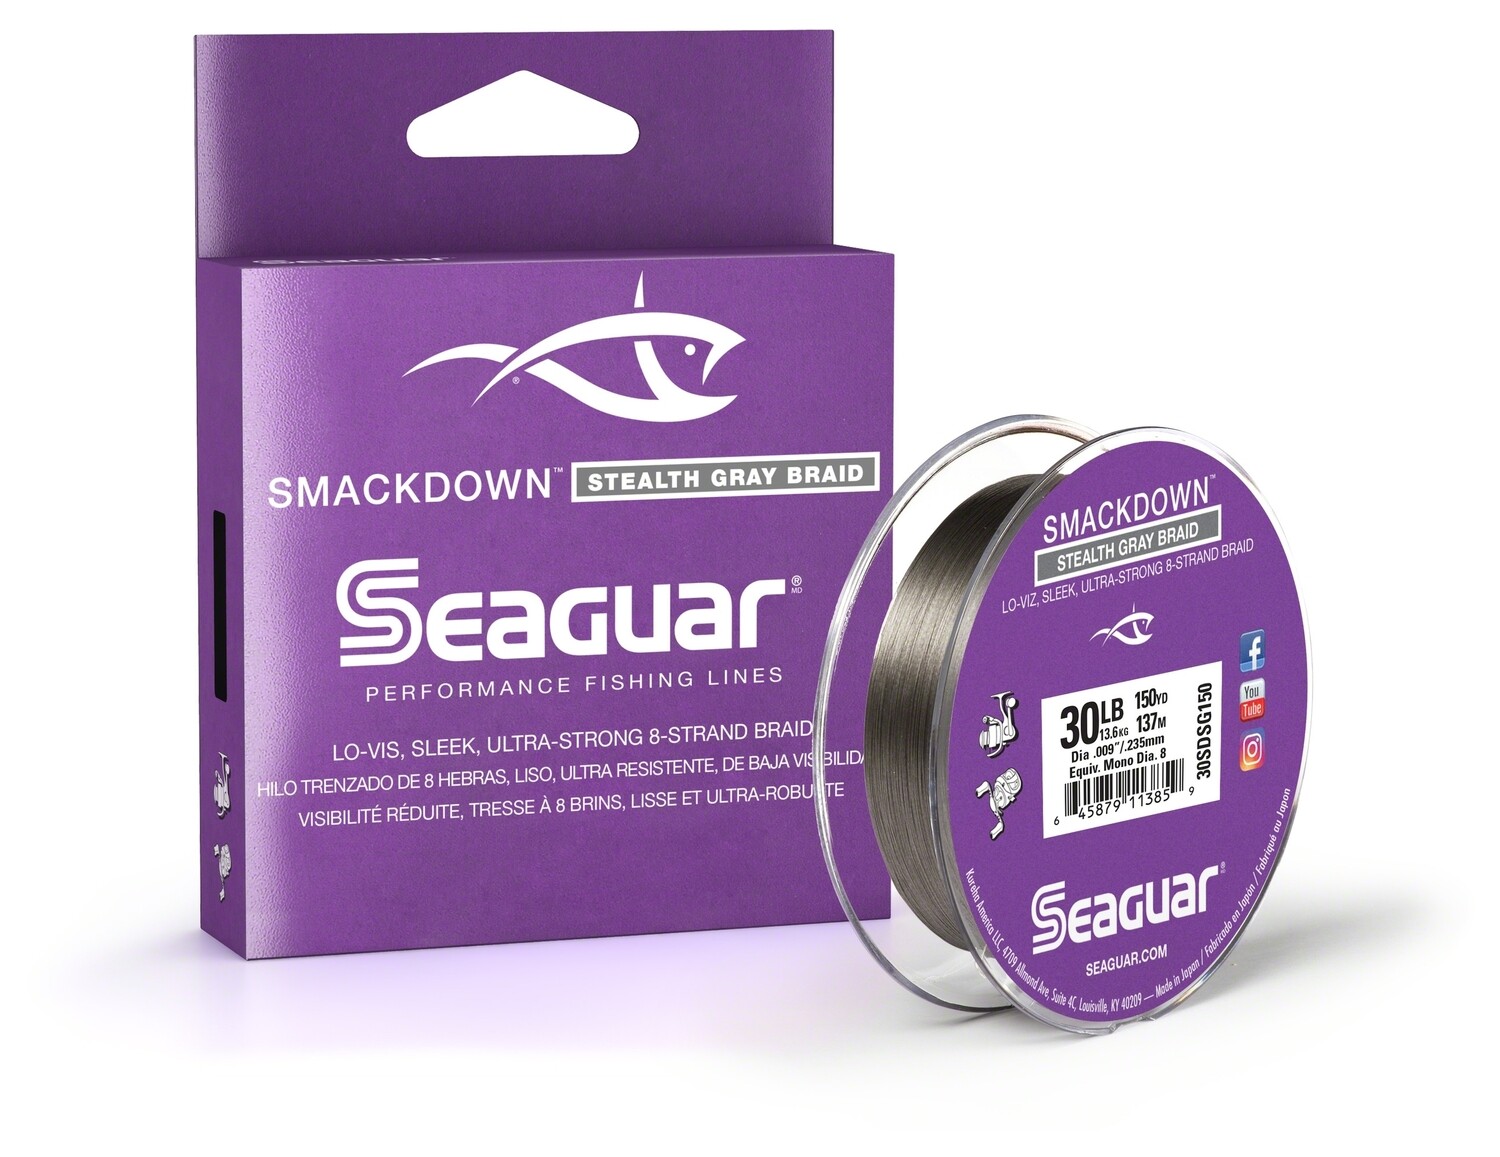 Seaguar Smackdown Braid 50 lb Stealth Gray 150 yd